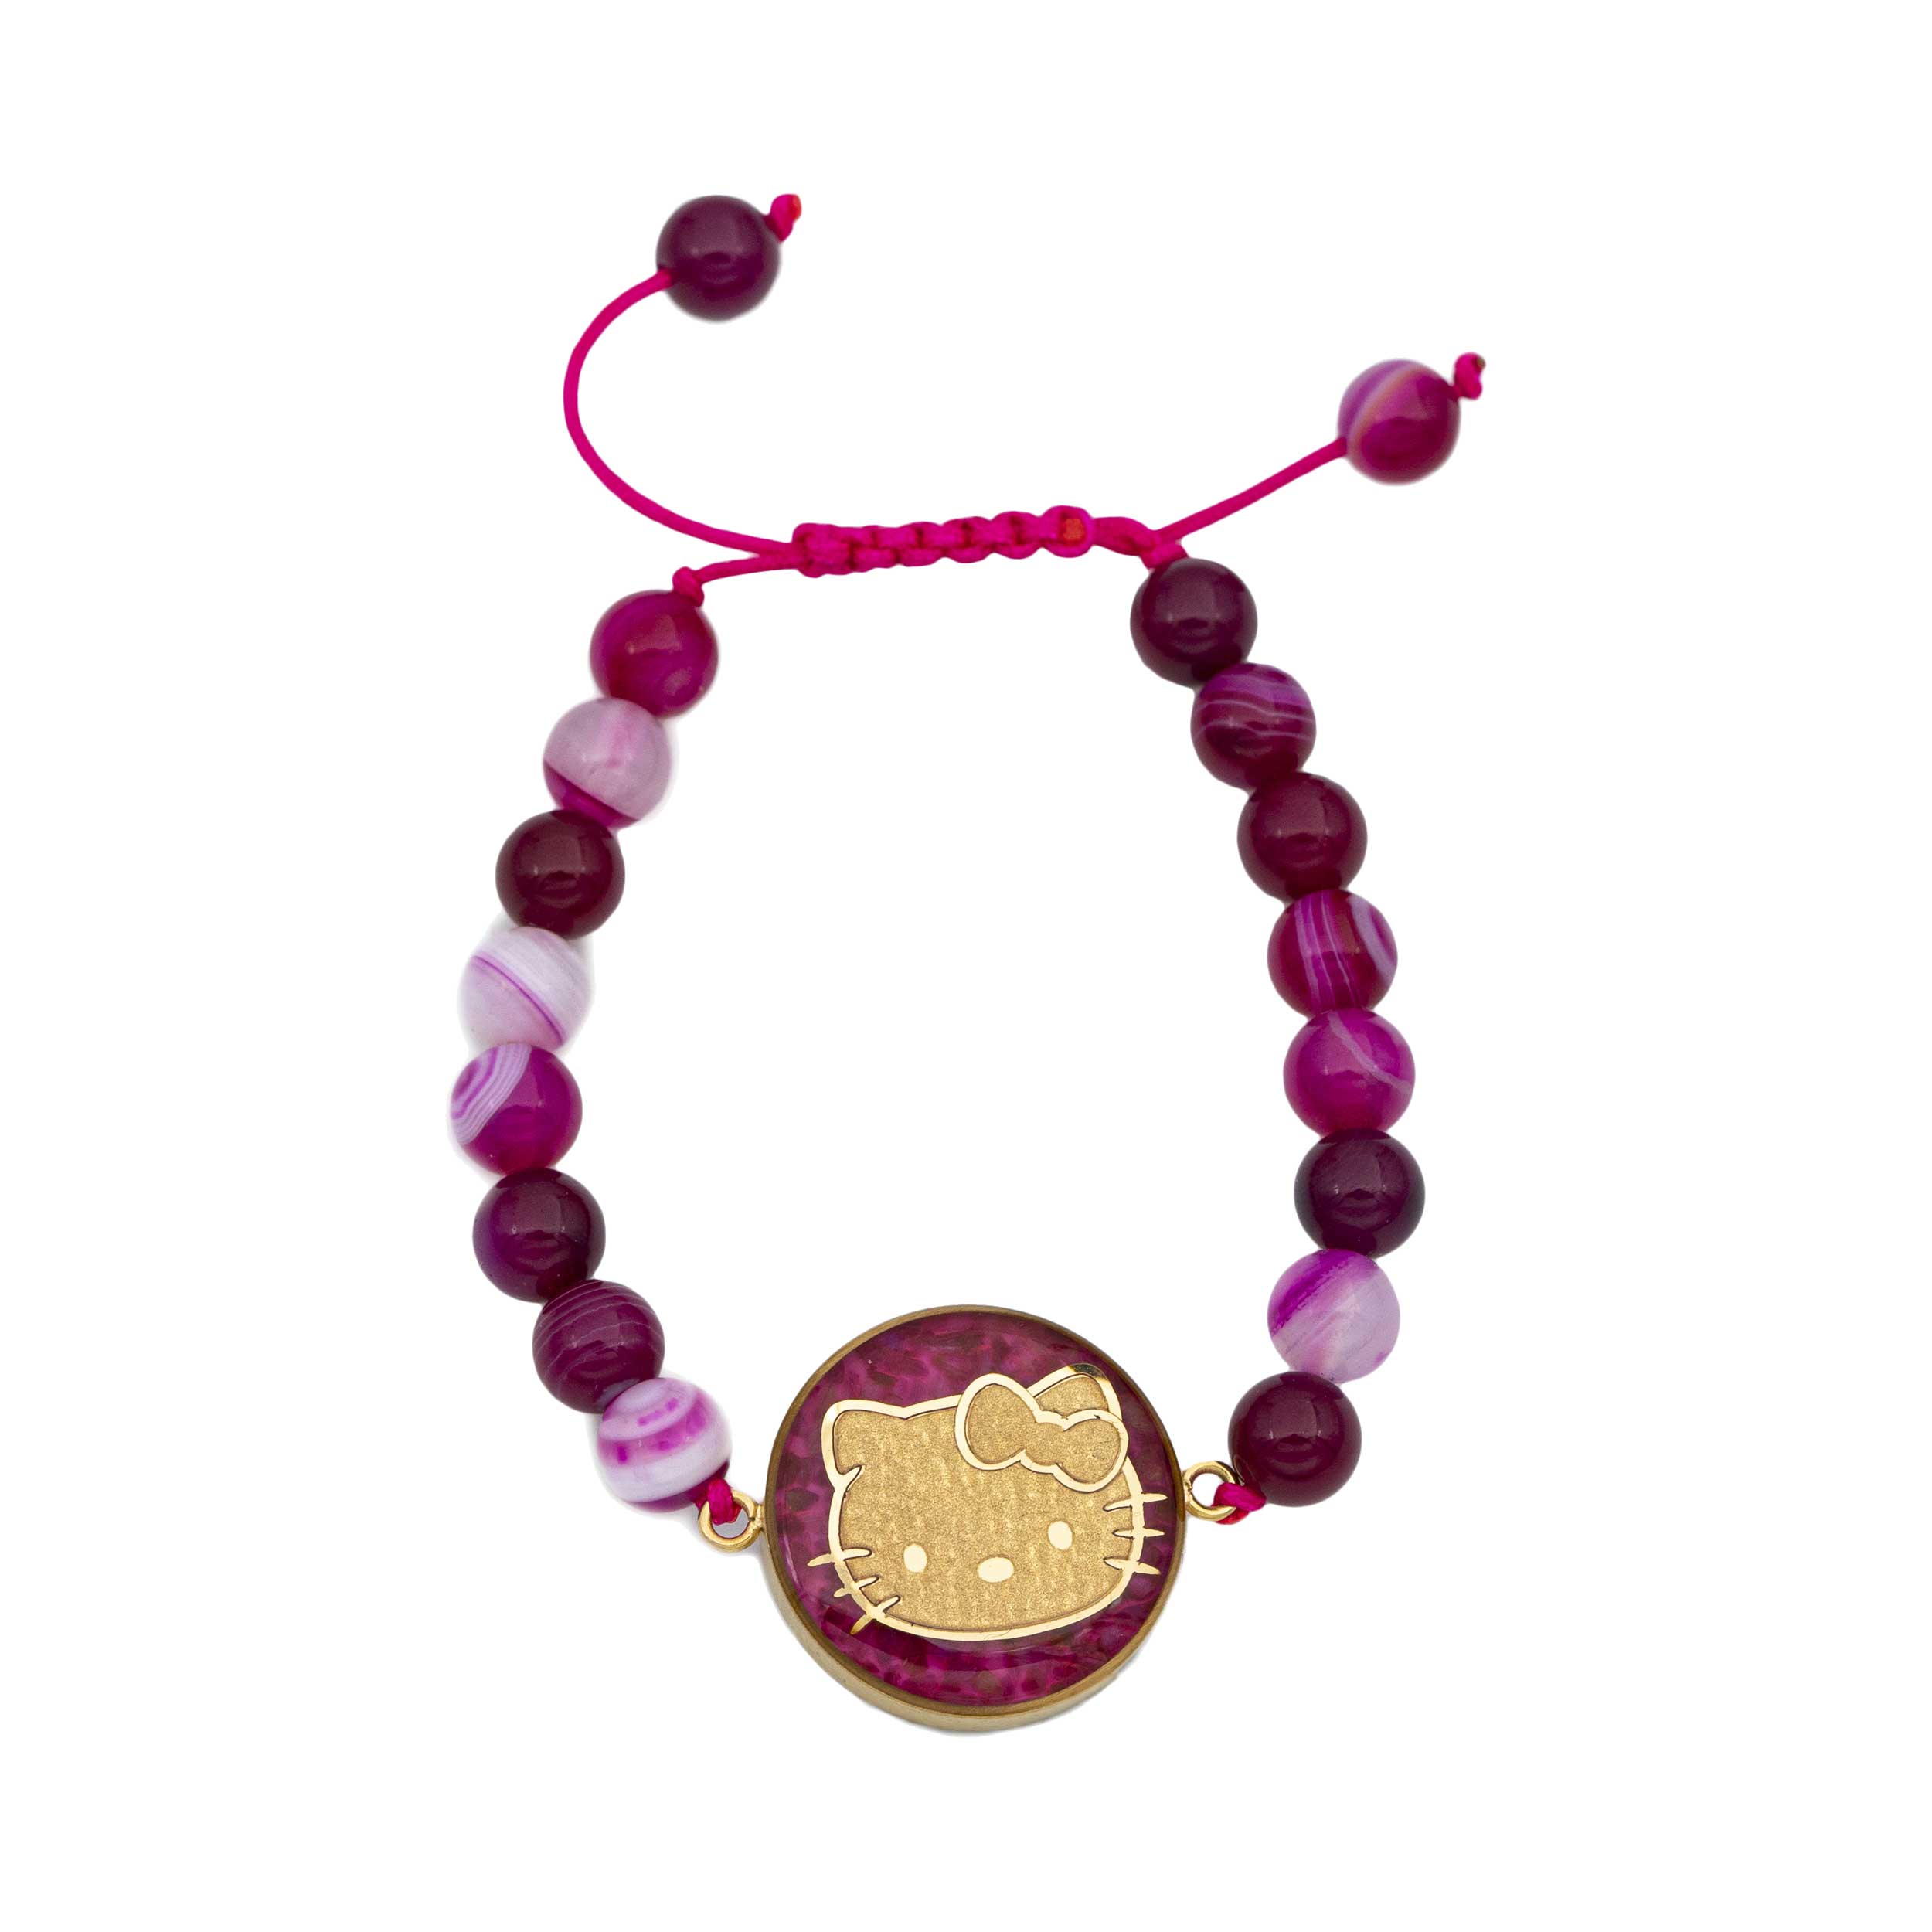 Pink opal stone bracelet and 24 carat gold leaf Kitty design